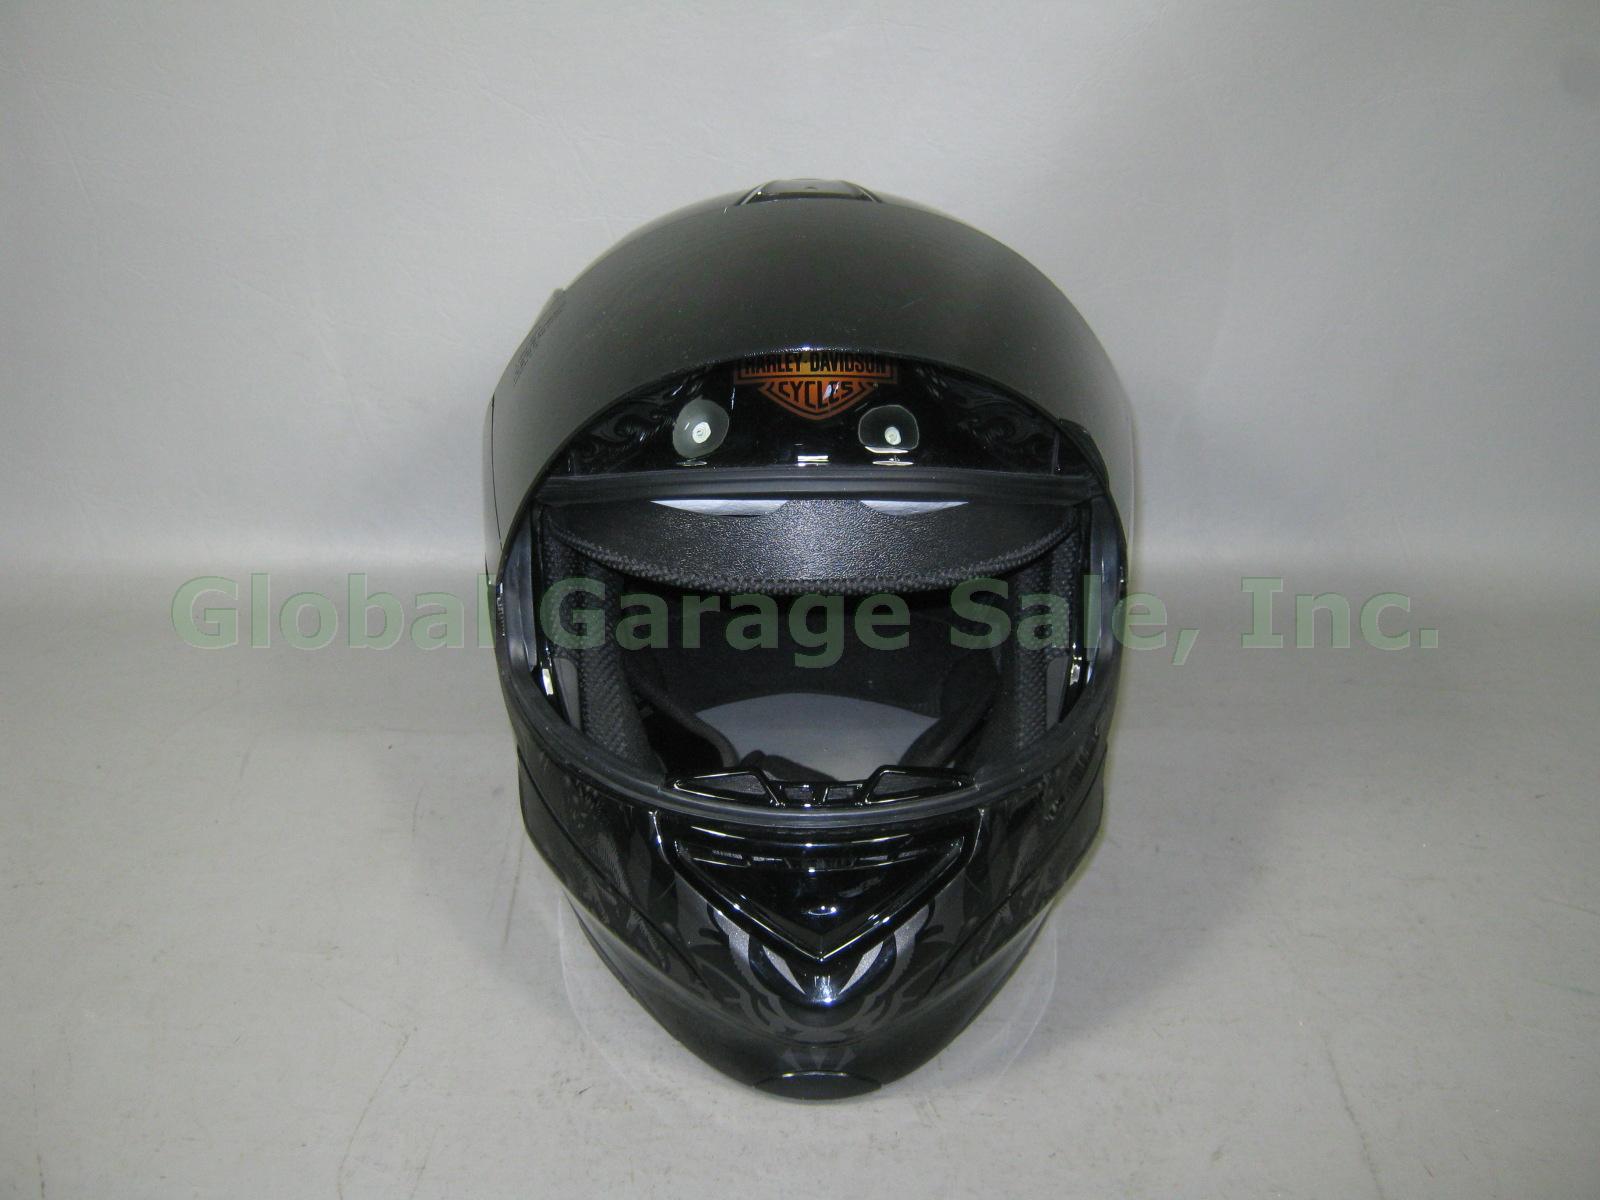 Mens KBC Harley Davidson Eagle Motorcycle Helmet Large W/ Black Visor Shield NR! 3